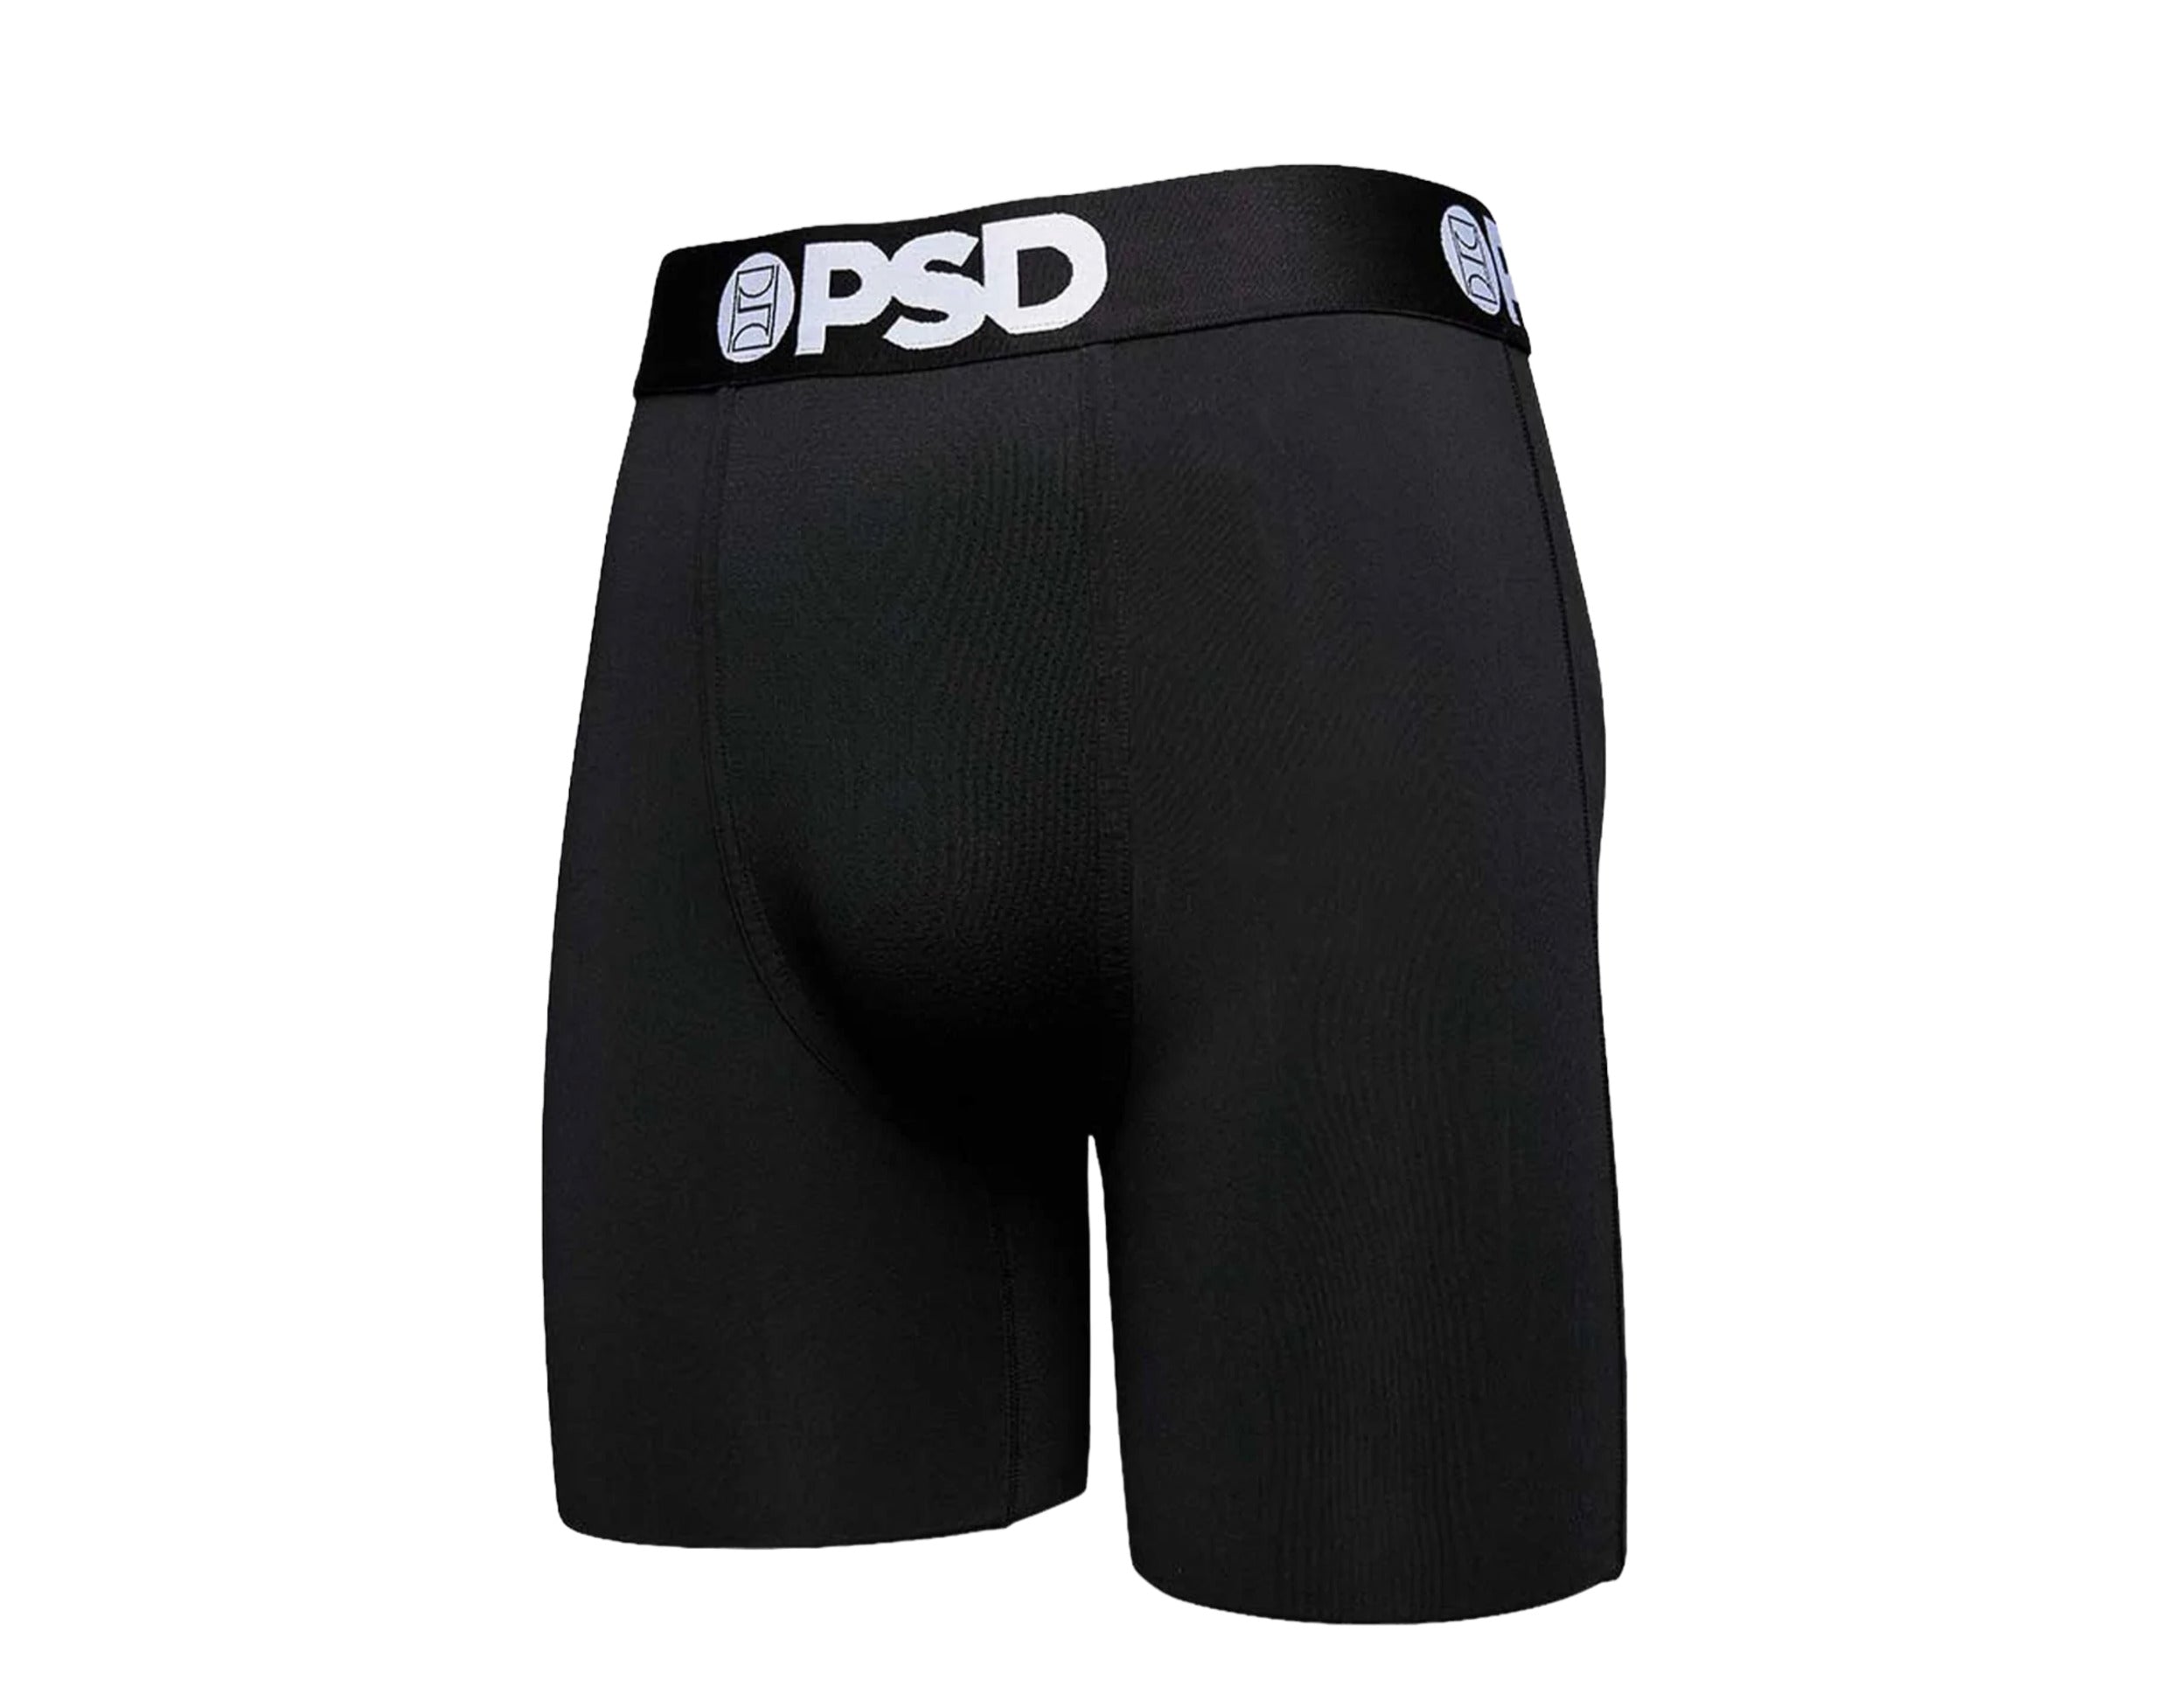 PSD Men's Solids Blk Modal 3-Pack Boxer Briefs, Black, XS at